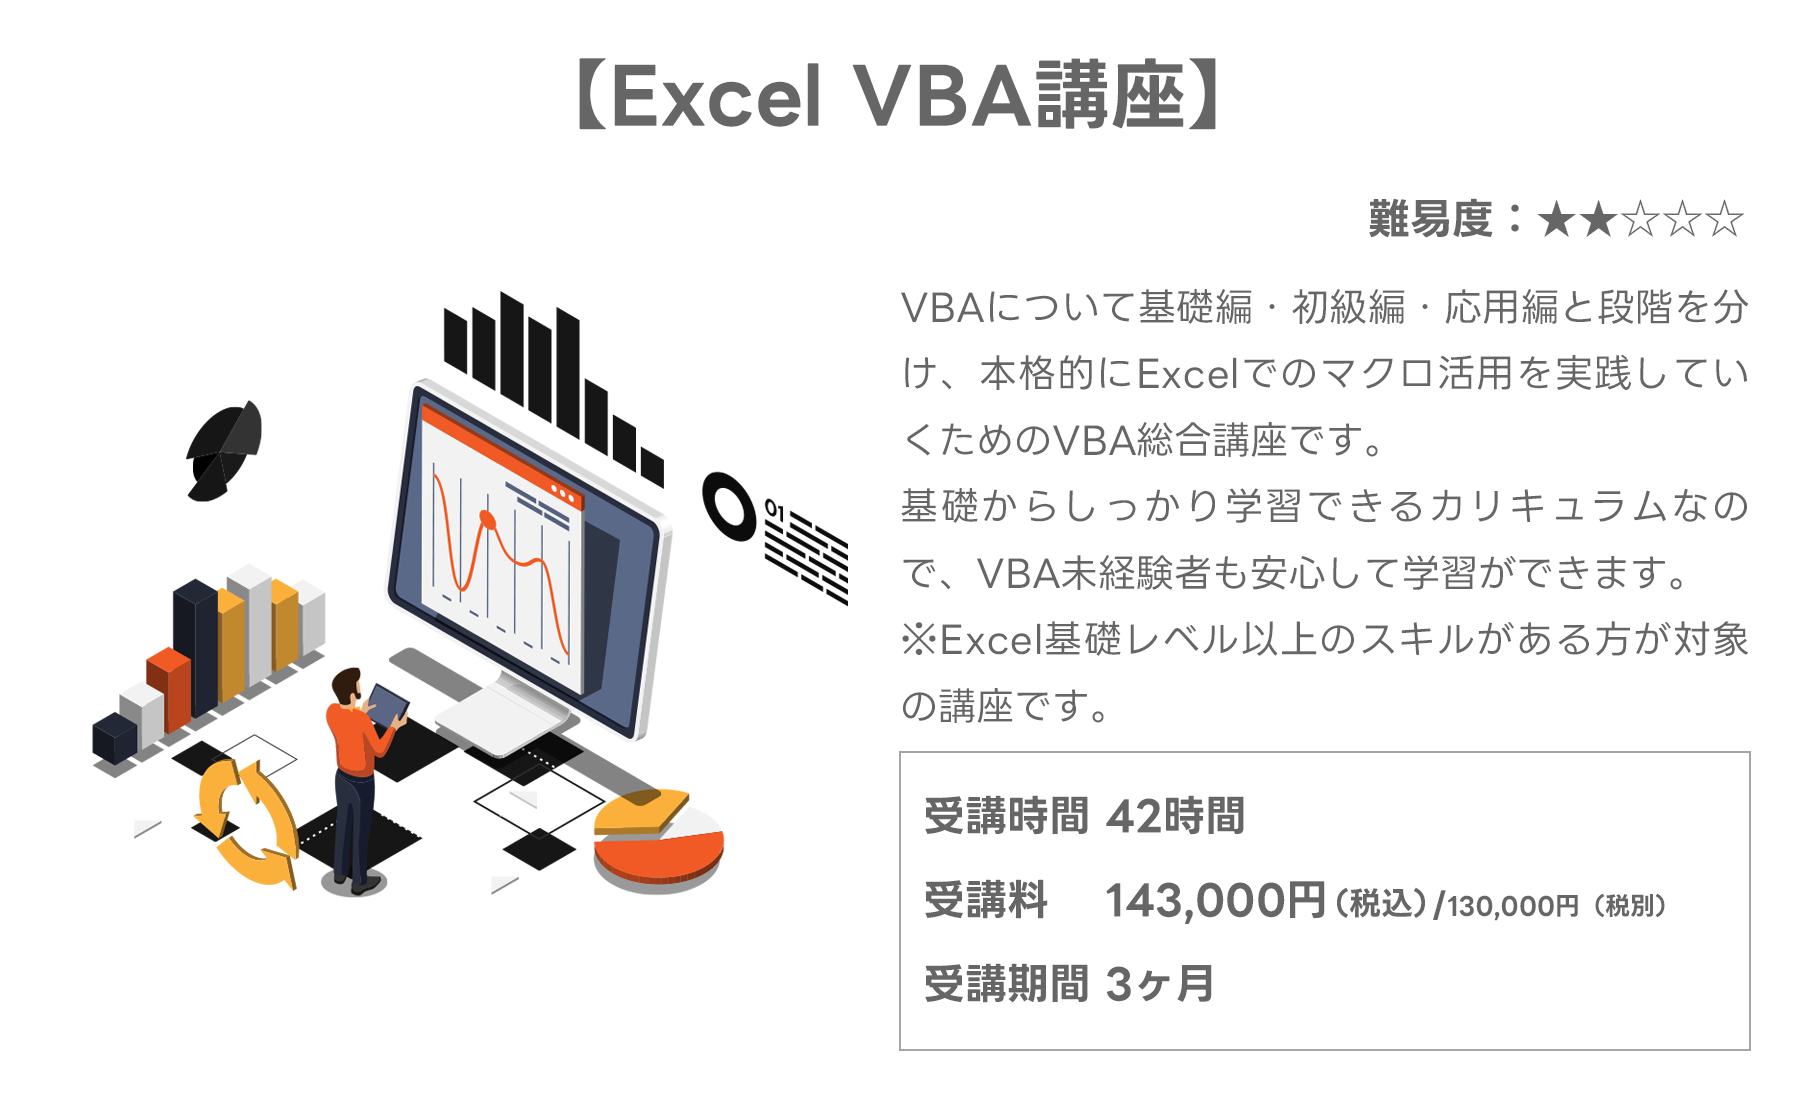 Excel VBA講座